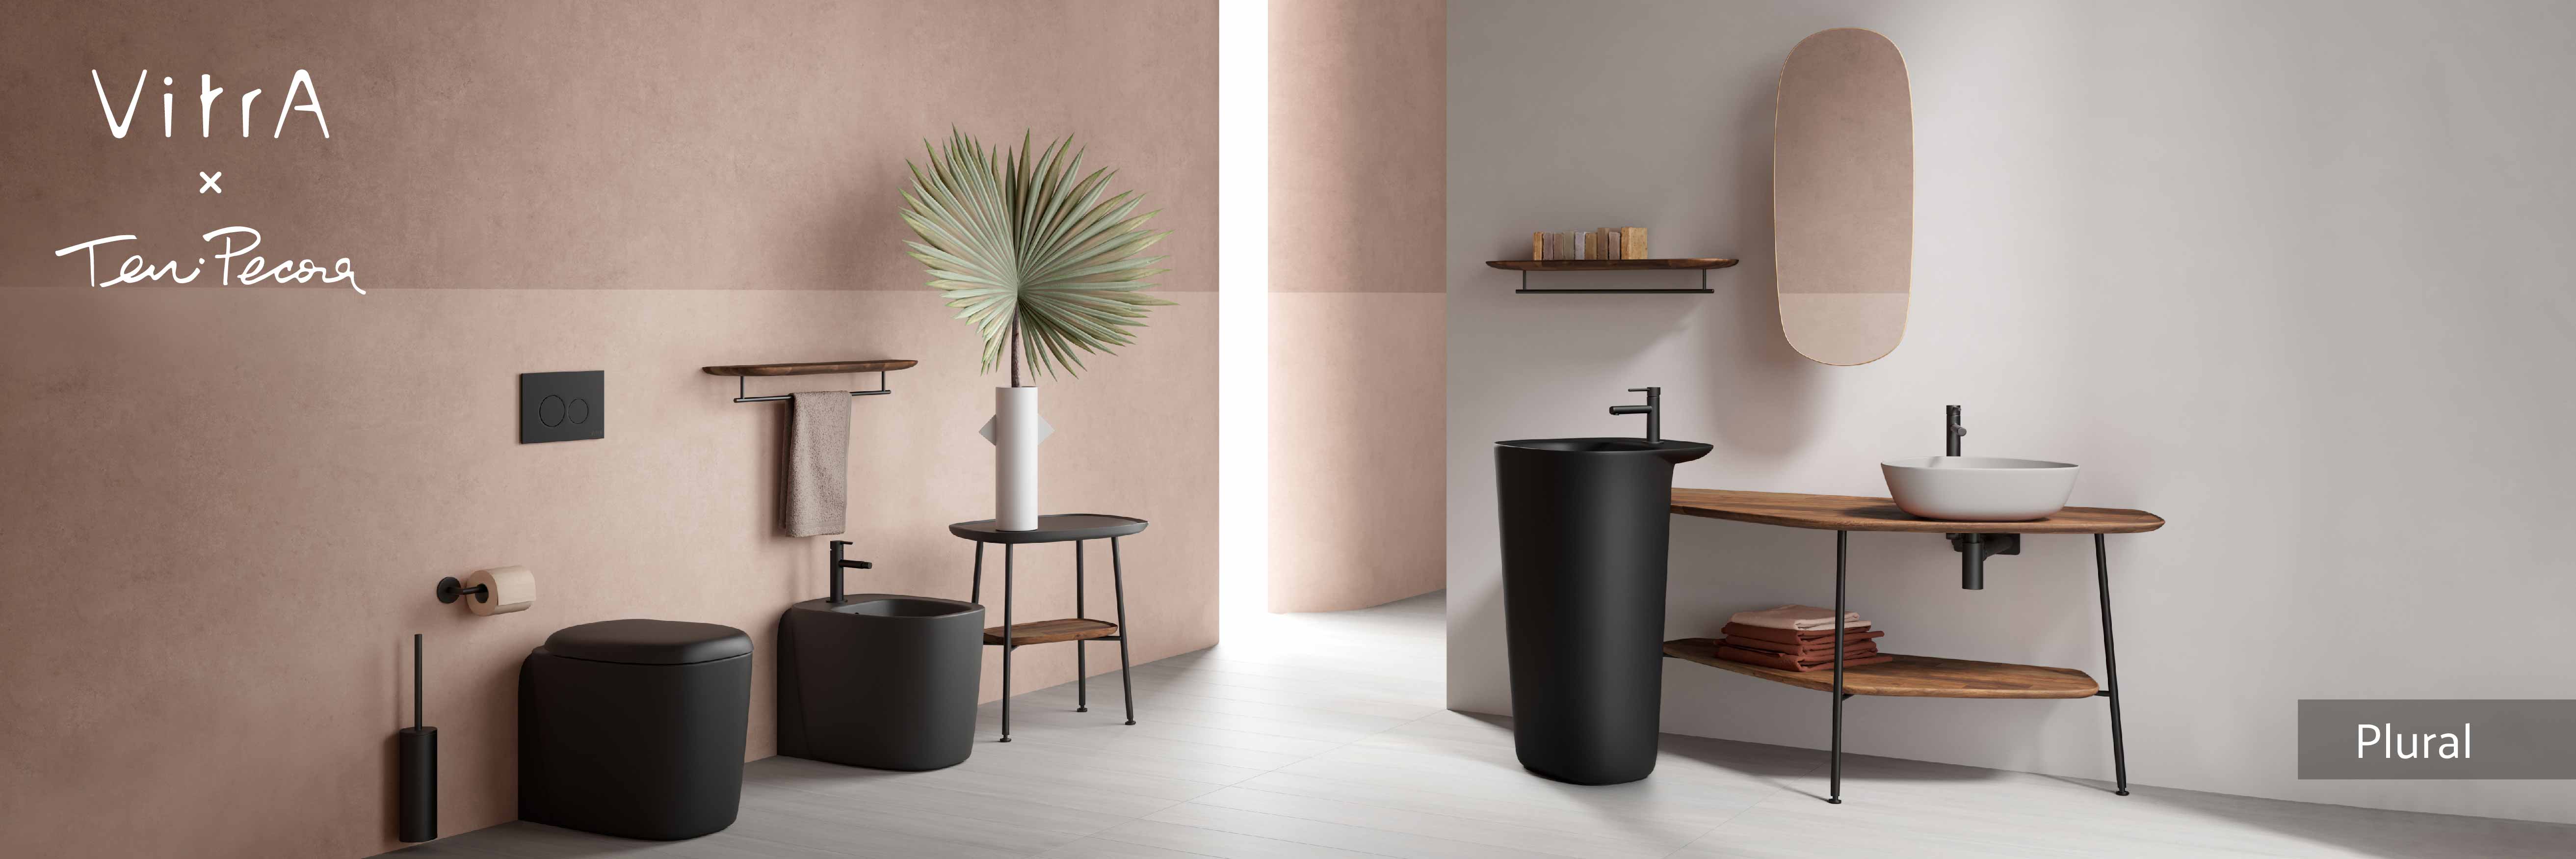 VitrA Bathroom @ Designjunction 2019